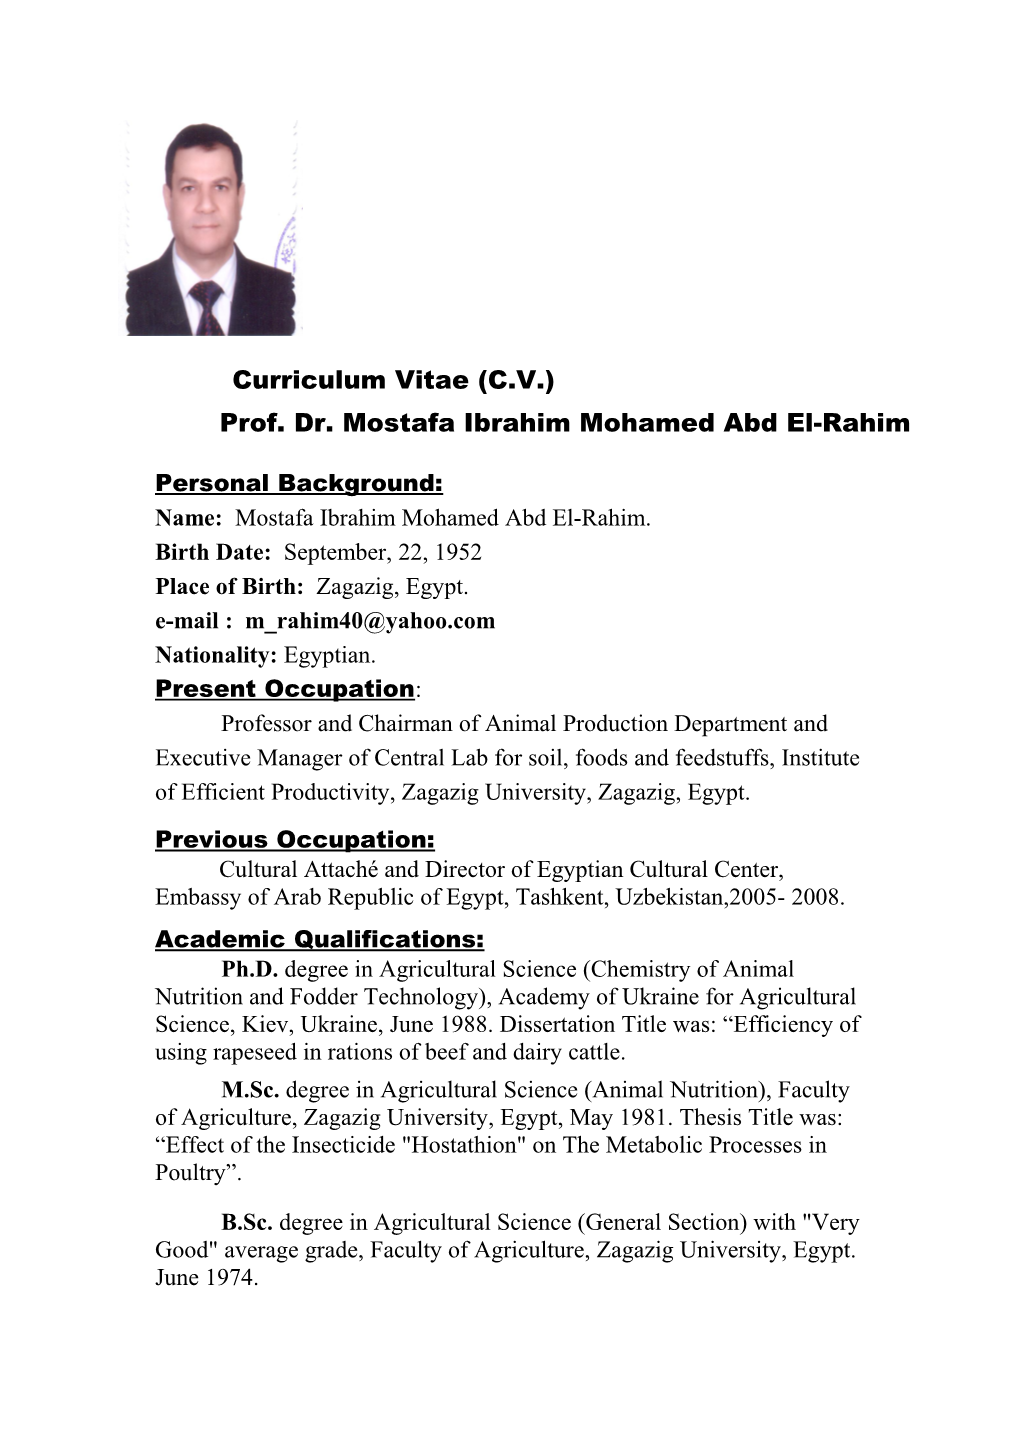 Prof. Dr. Mostafa Ibrahim Mohamed Abd El-Rahim